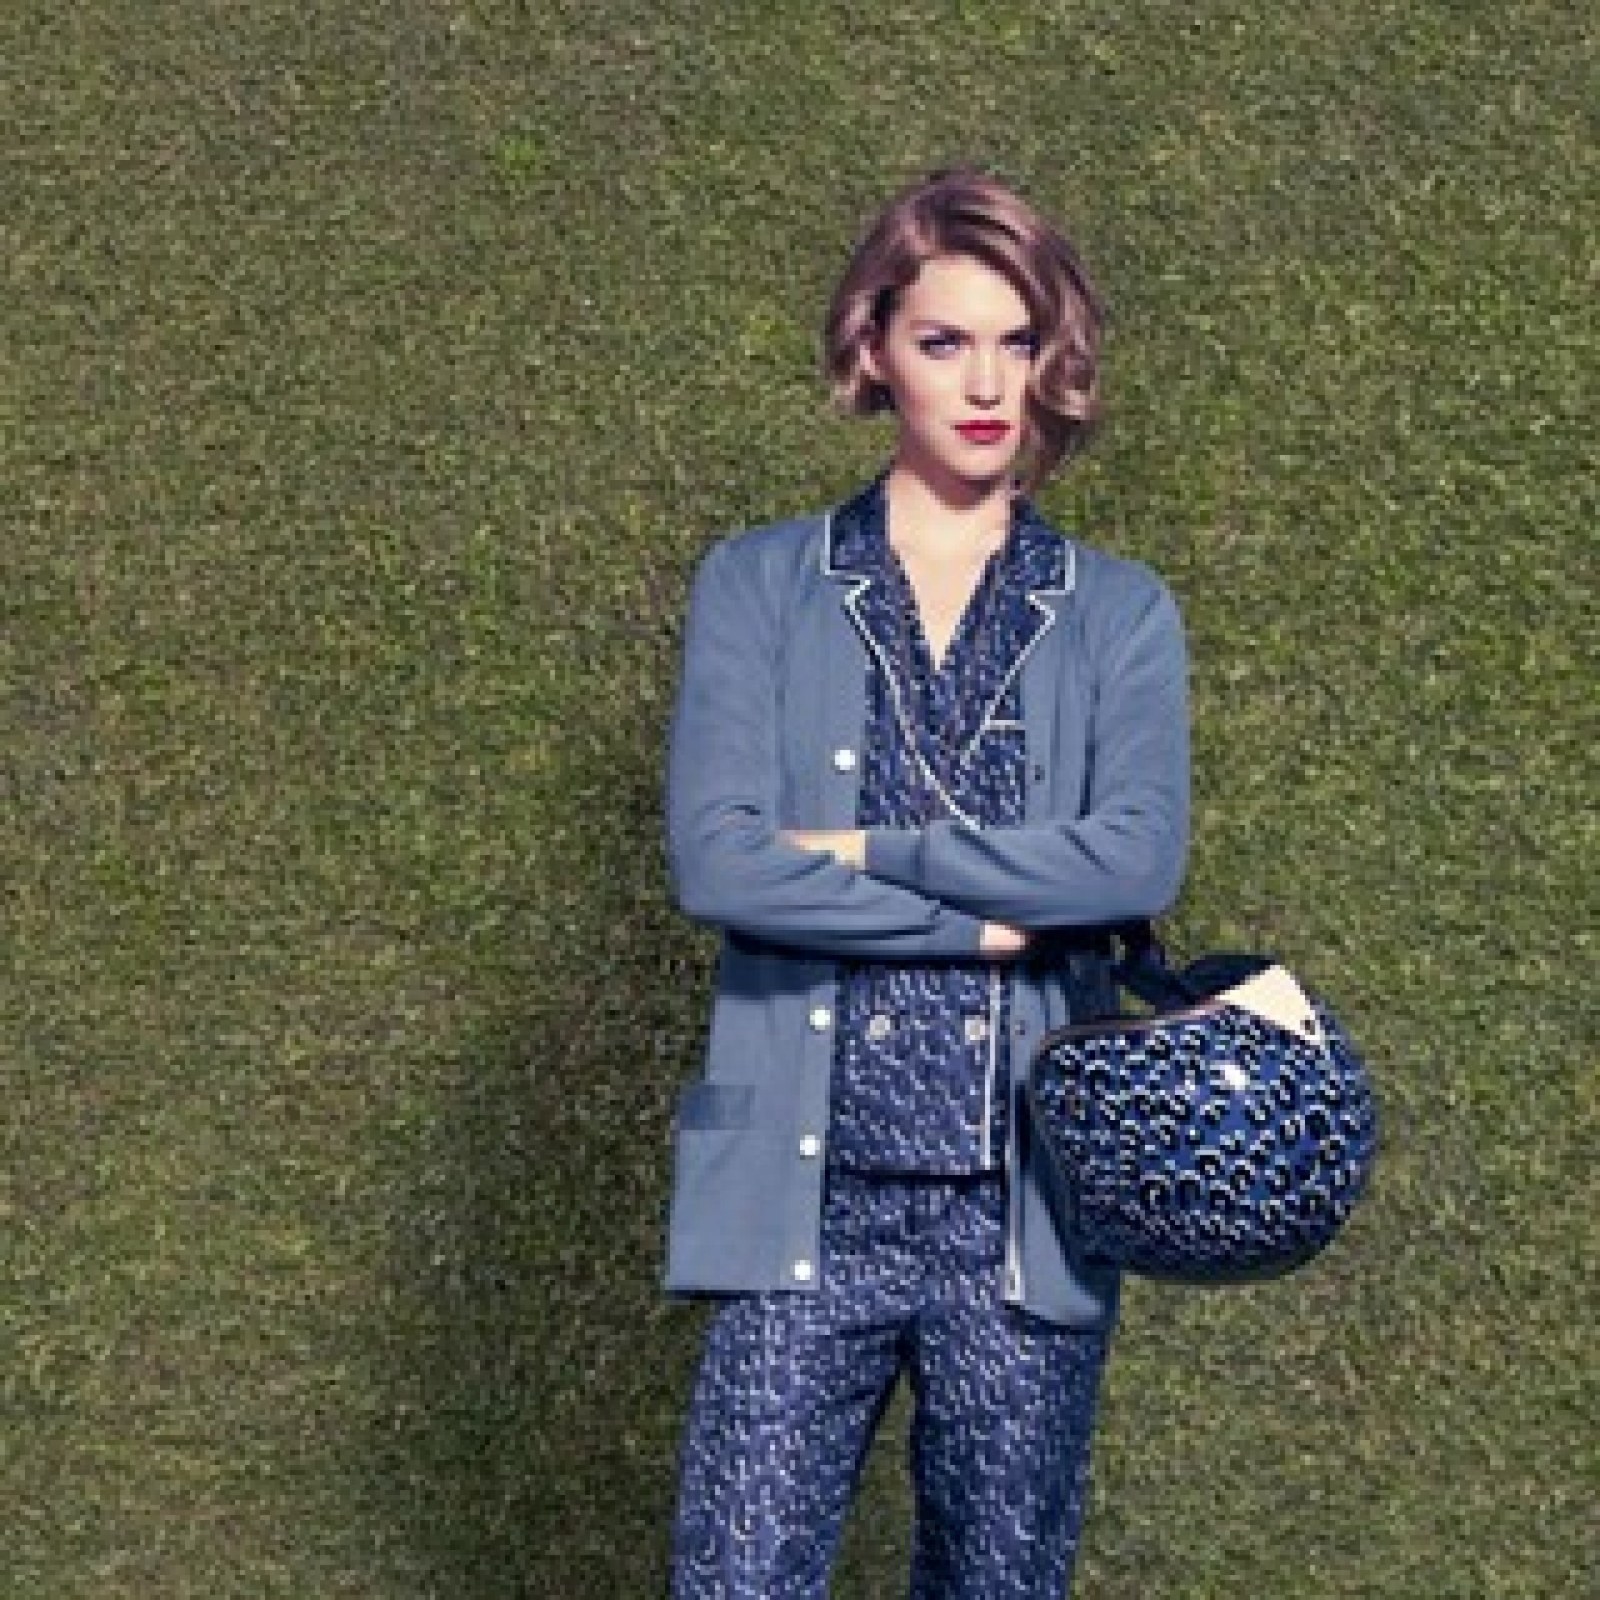 Louis Vuitton $1200 Silk Leopard Pajamas are Decadently Dreamy